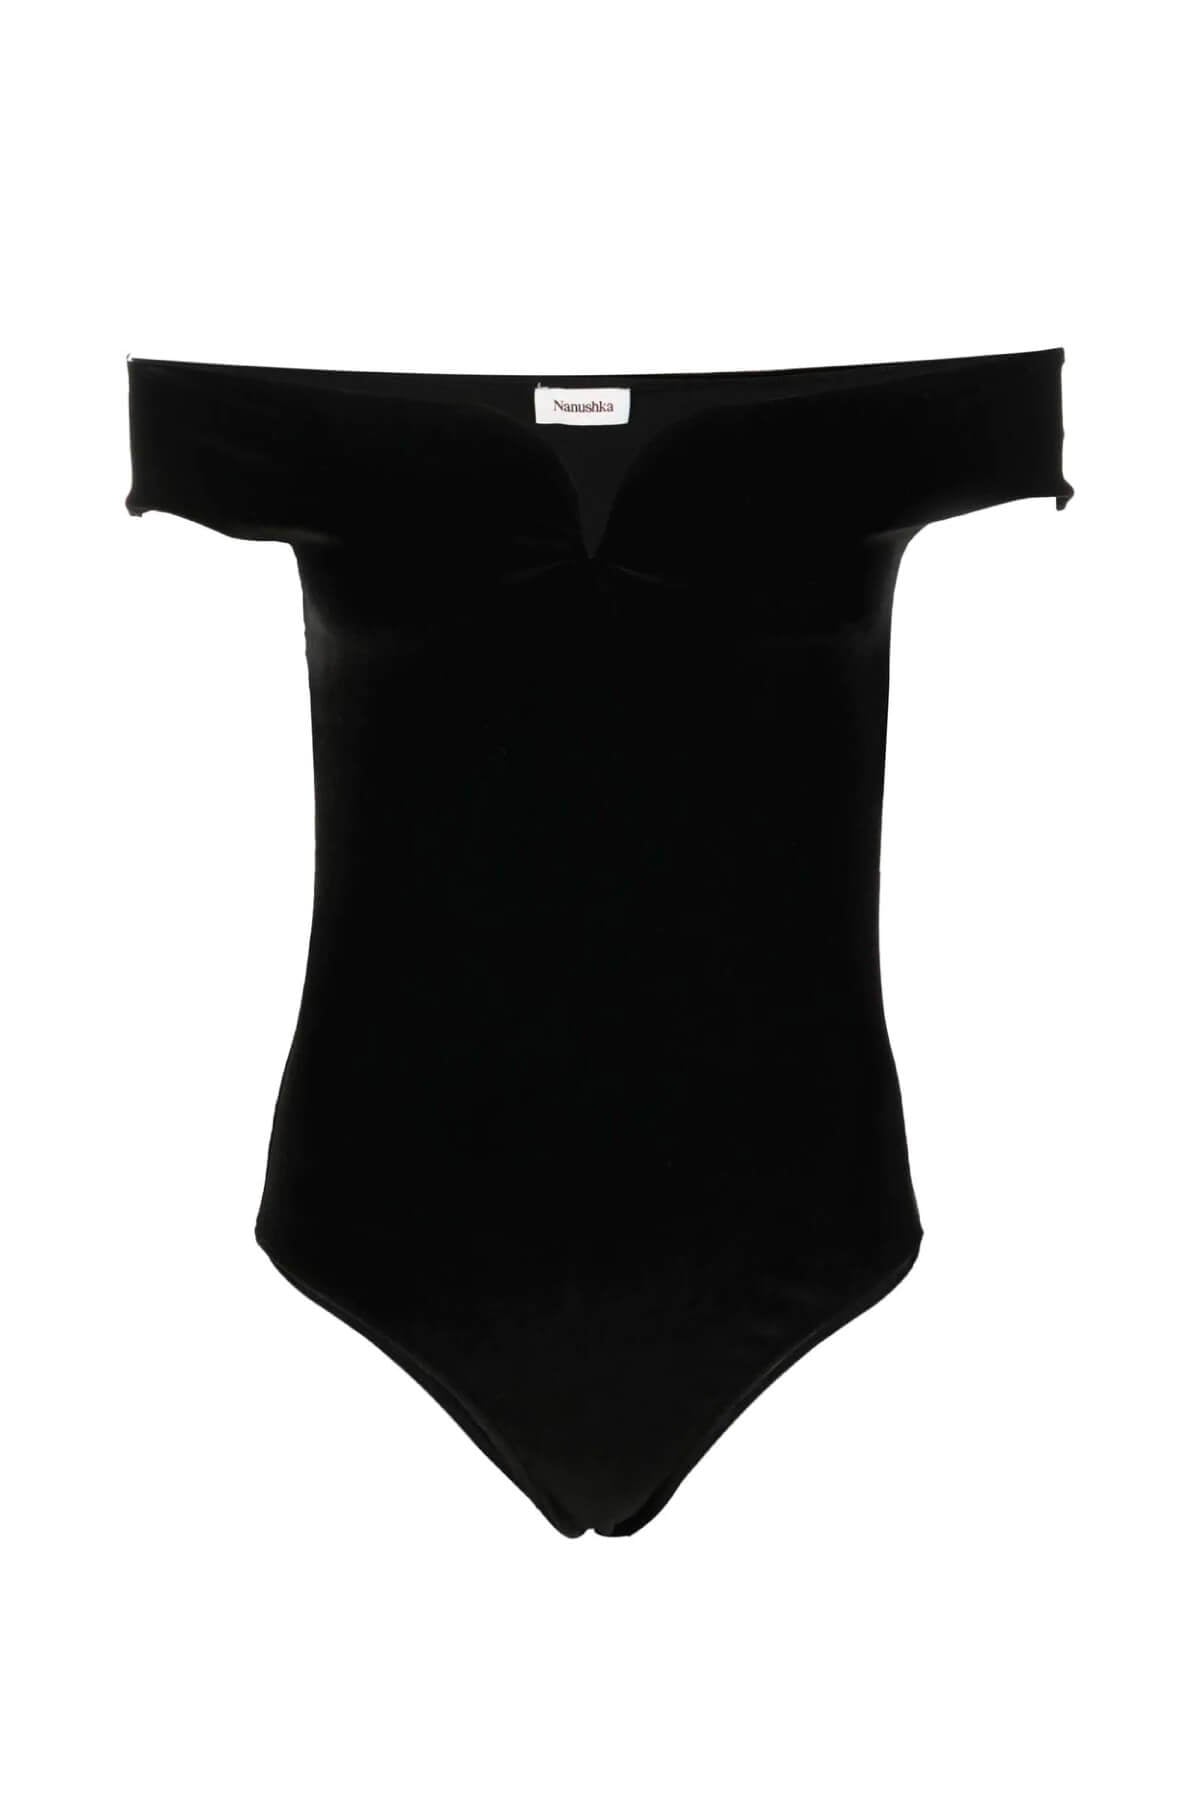 Nanushka Gesa Velvet Bodysuit - Black